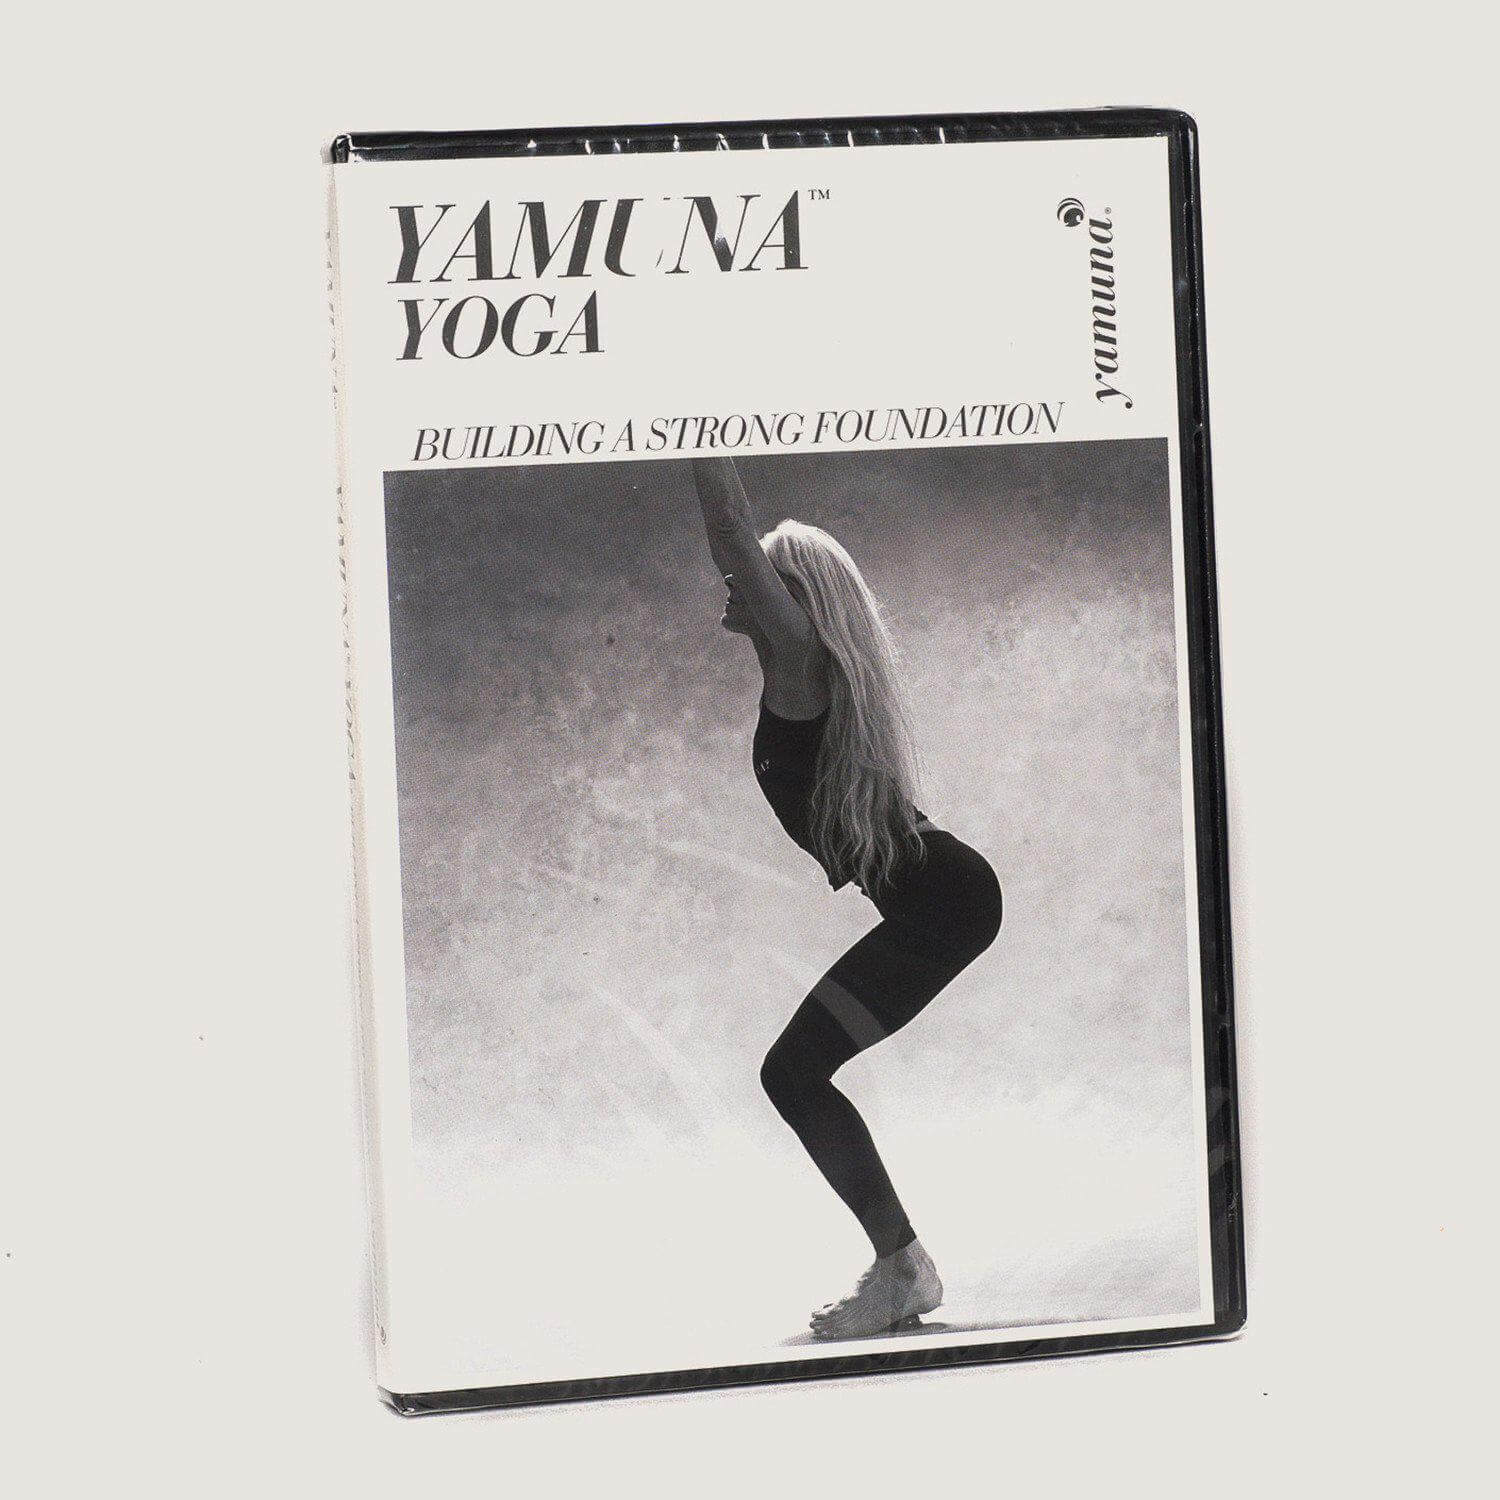 Yamuna Body Rolling Yoga DVD